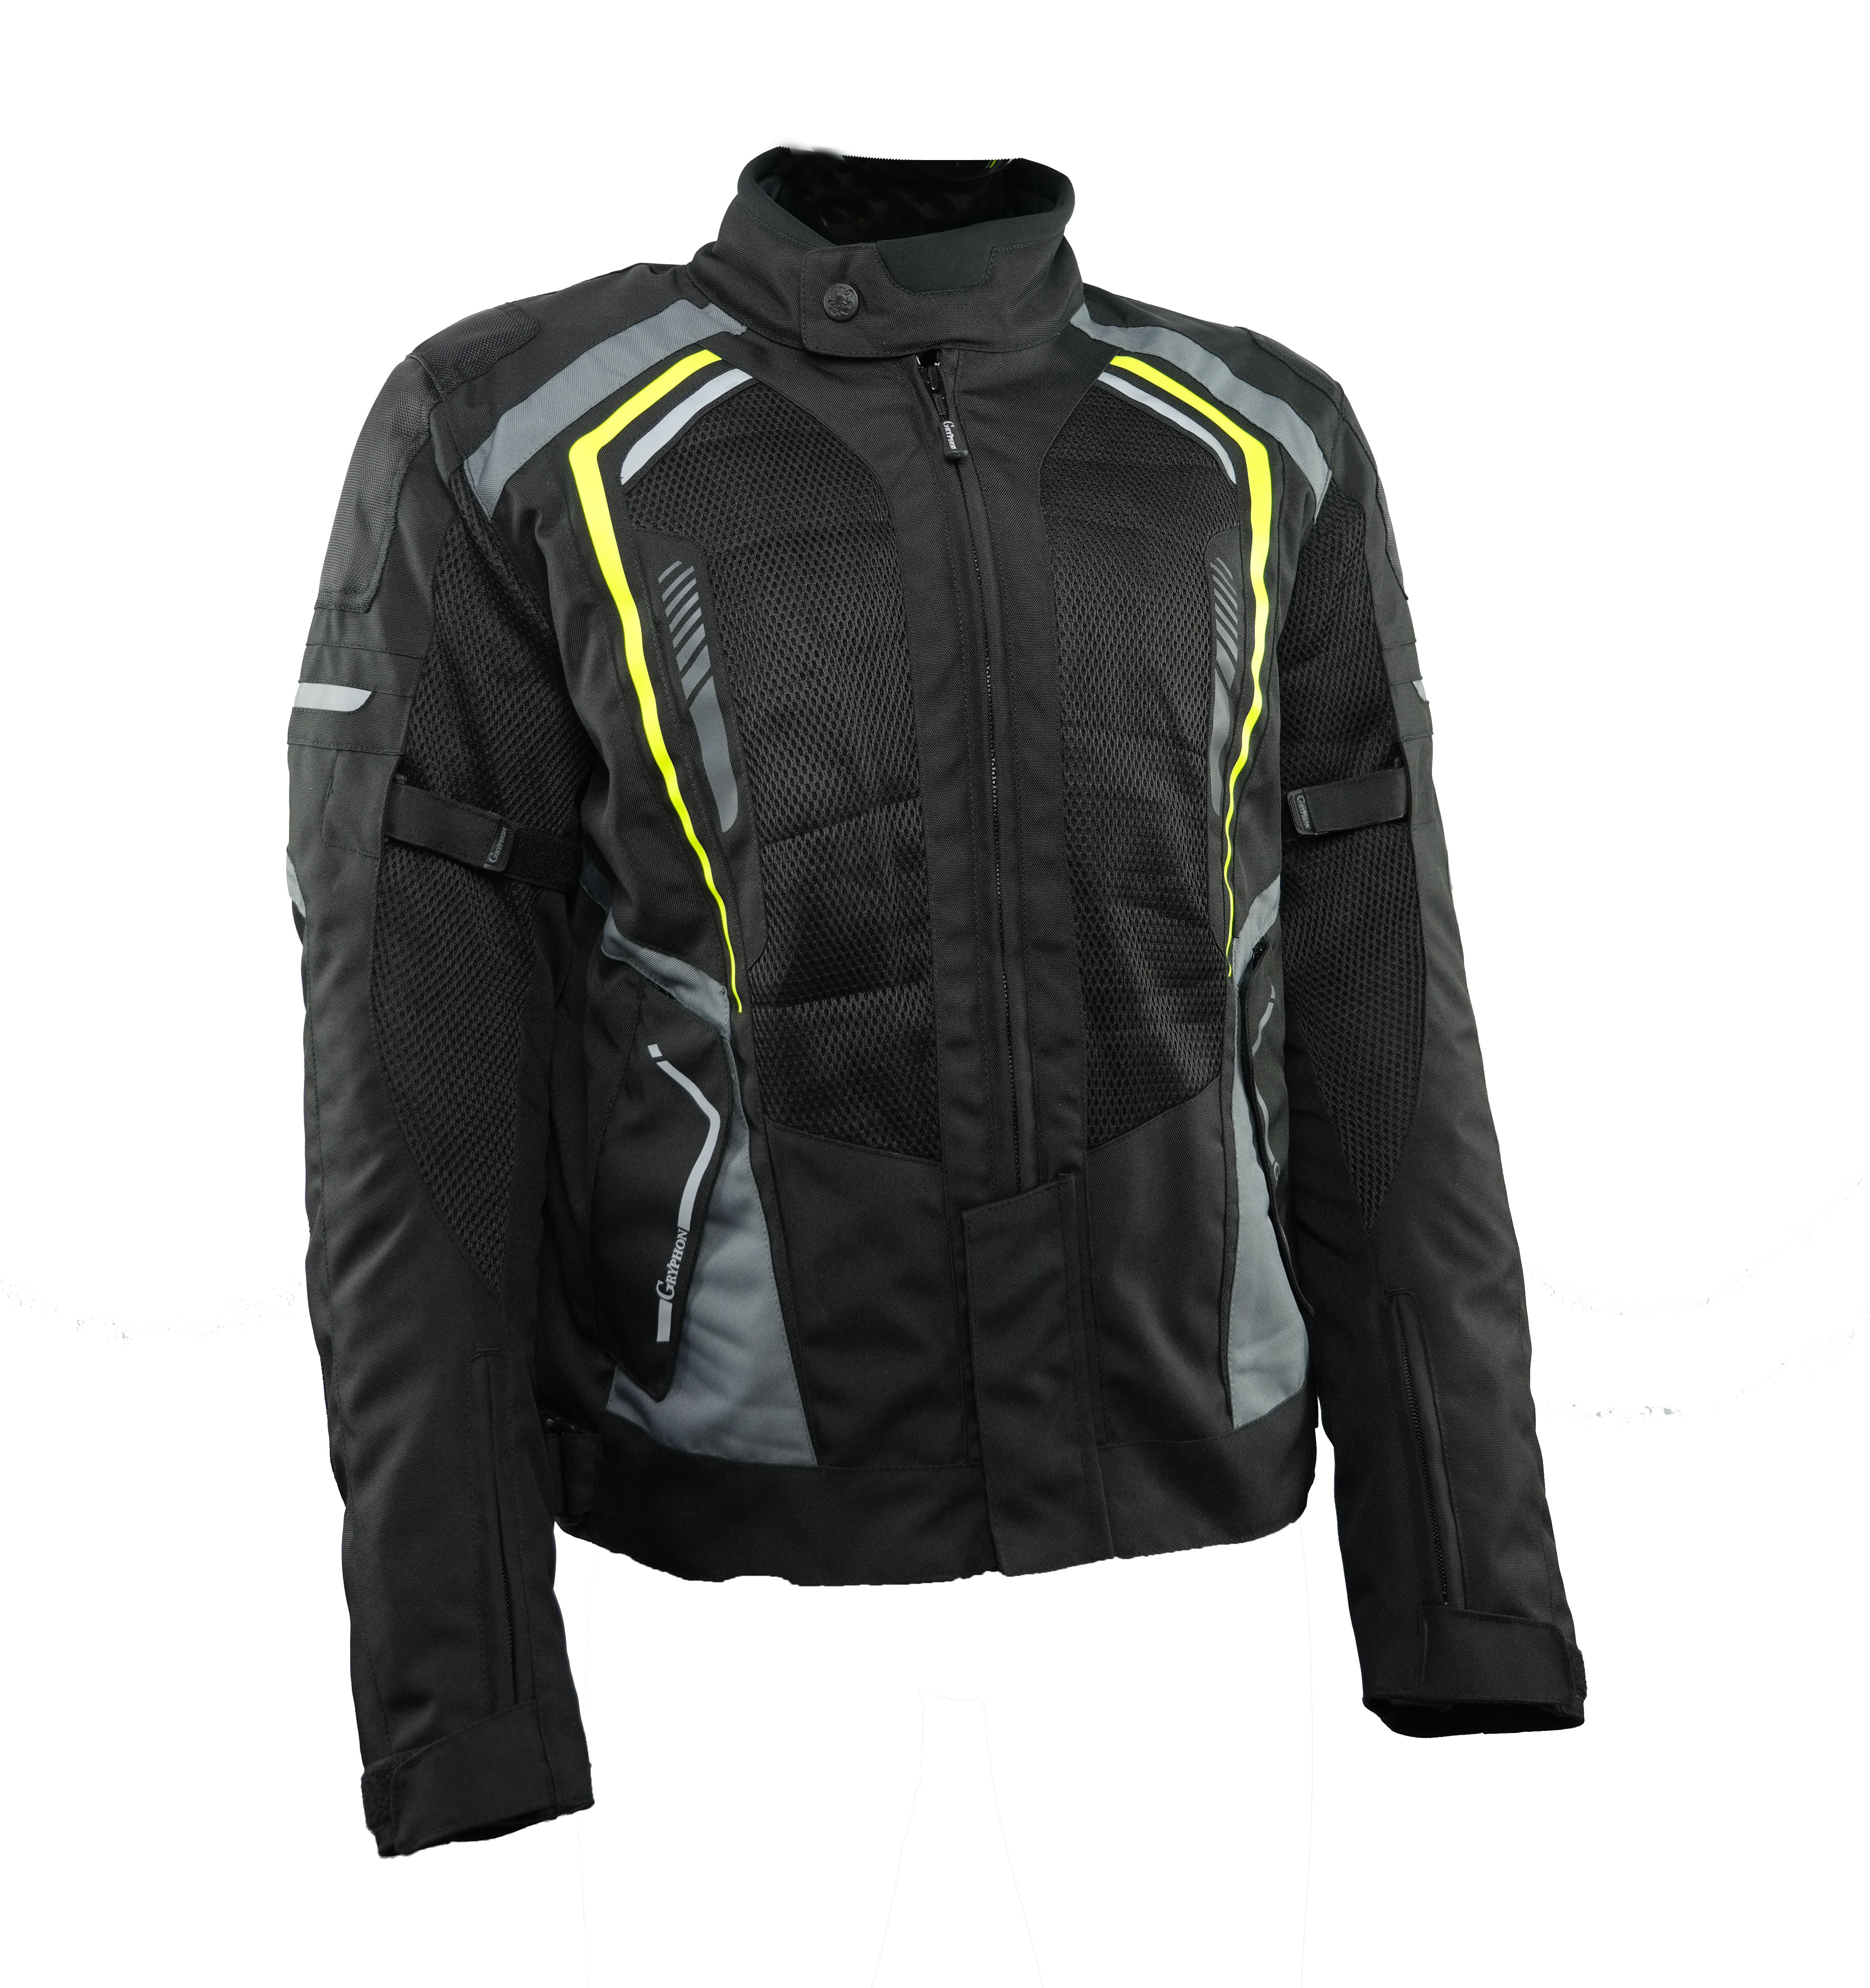 Rev'it TORQUE 2 H2O Jacket Black Gray For Sale Online - Outletmoto.eu